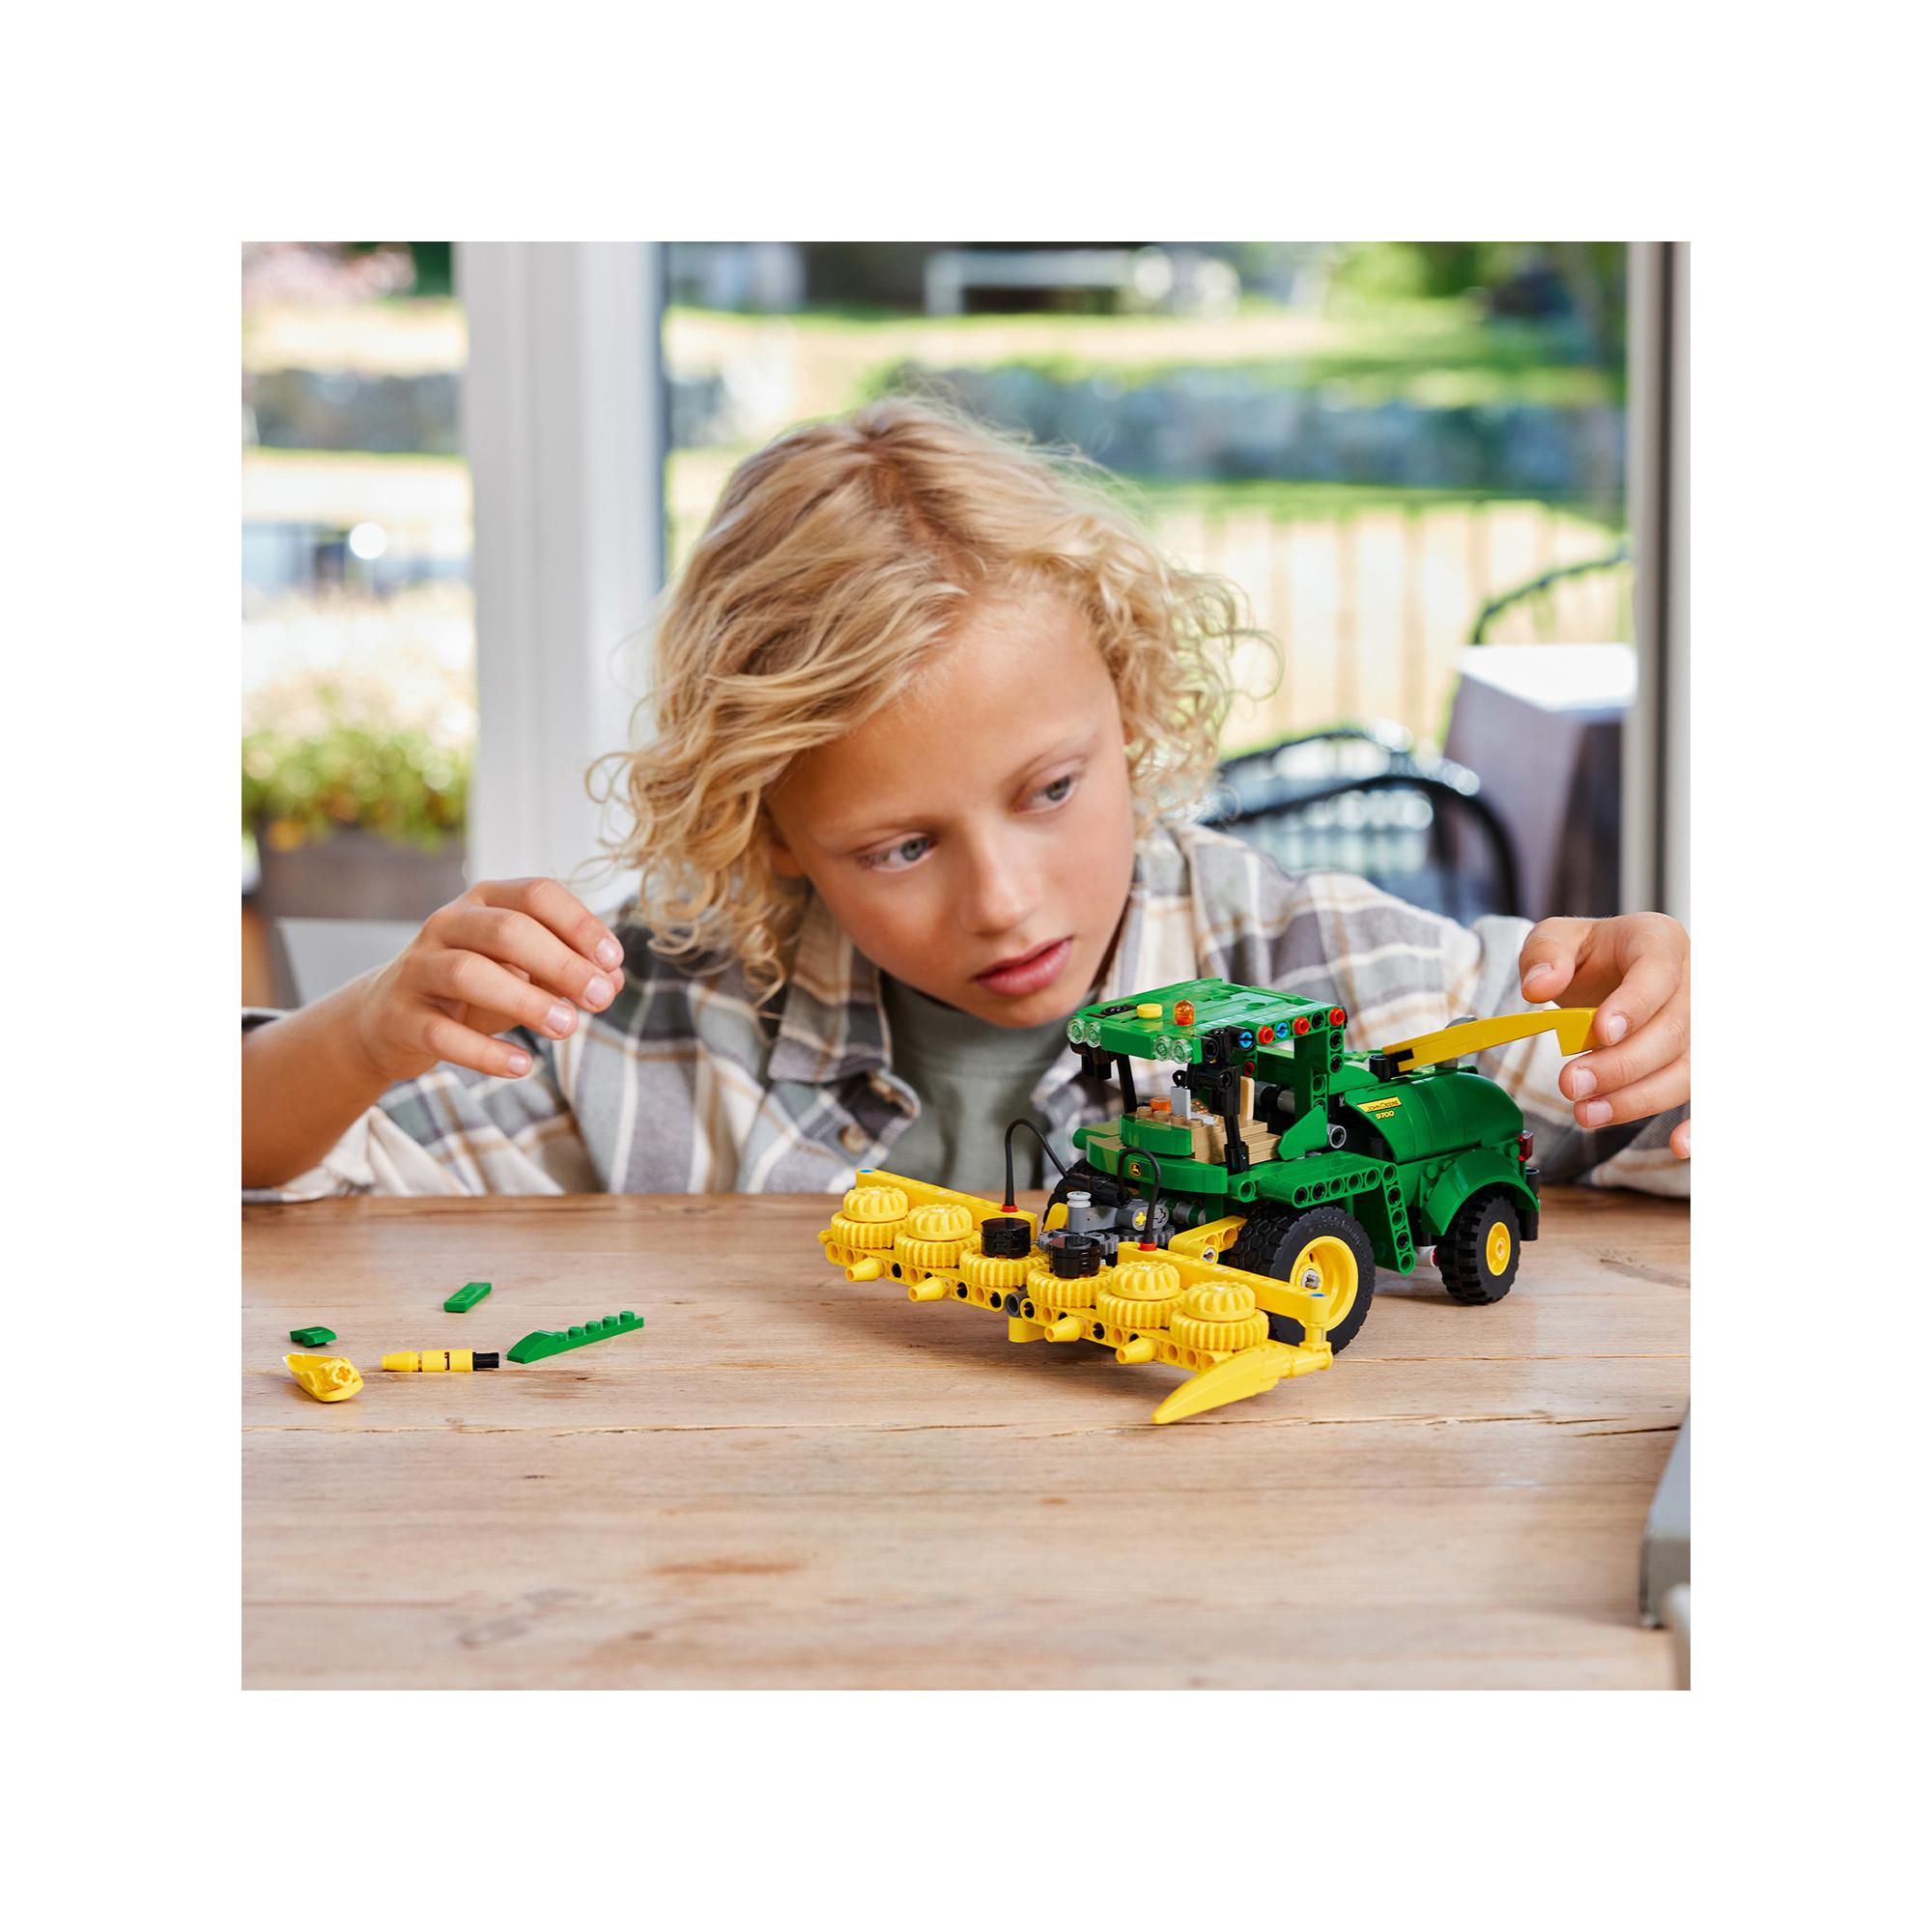 LEGO®  42168 John Deere 9700 Forage Harvester 